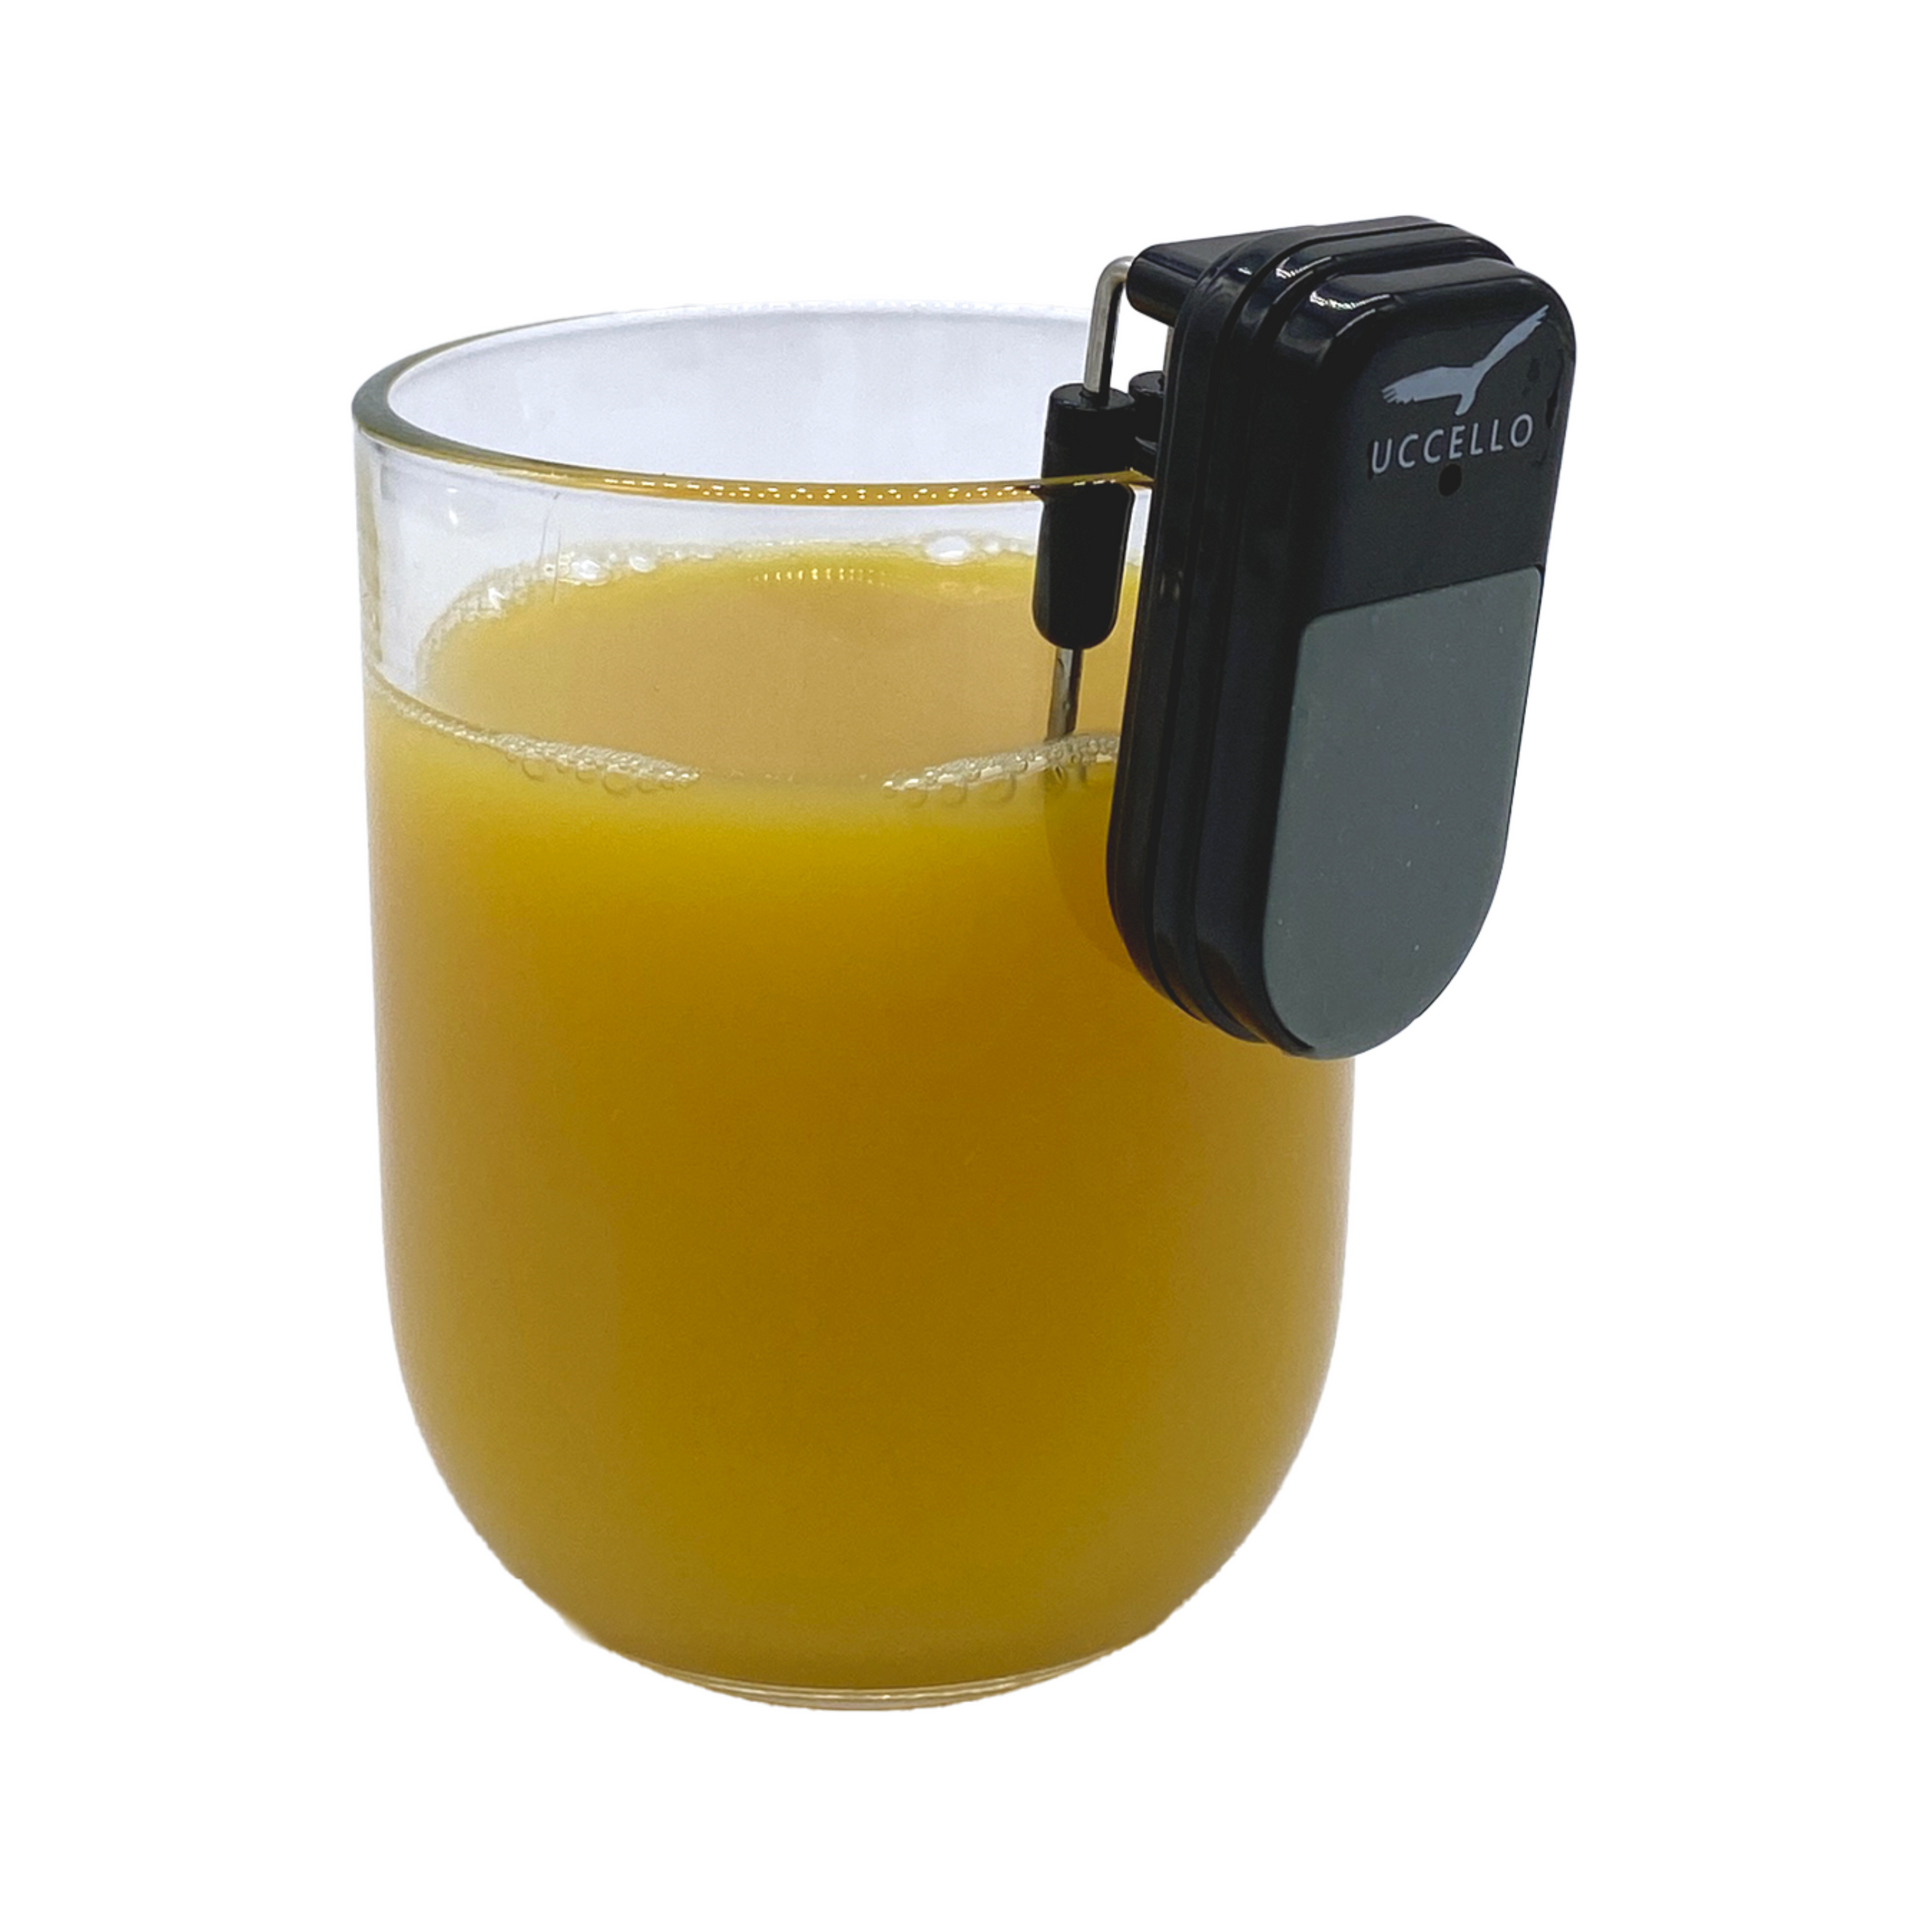 Liquid Level Indicator sitting on the rim of a small glass of orange juice